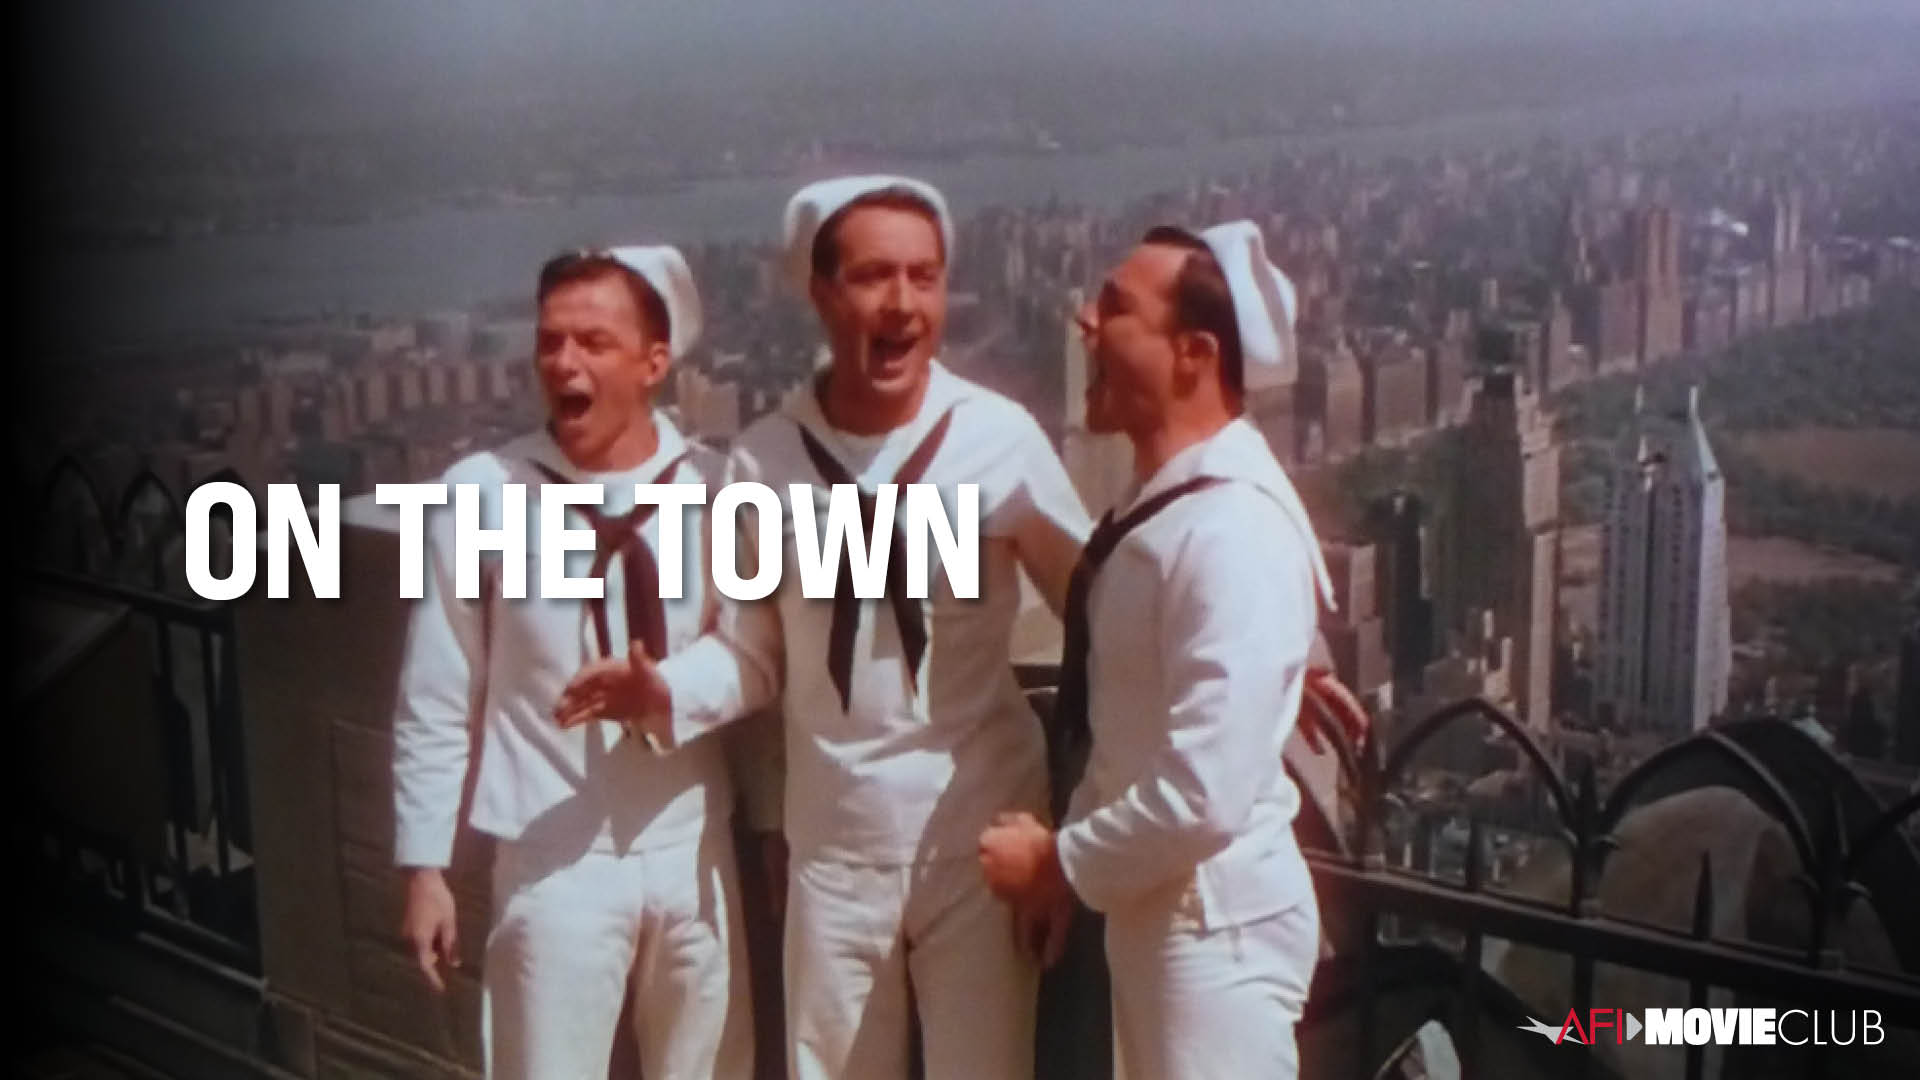 On the Town Film Still - Gene Kelly, Frank Sinatra, and Jules Munshin